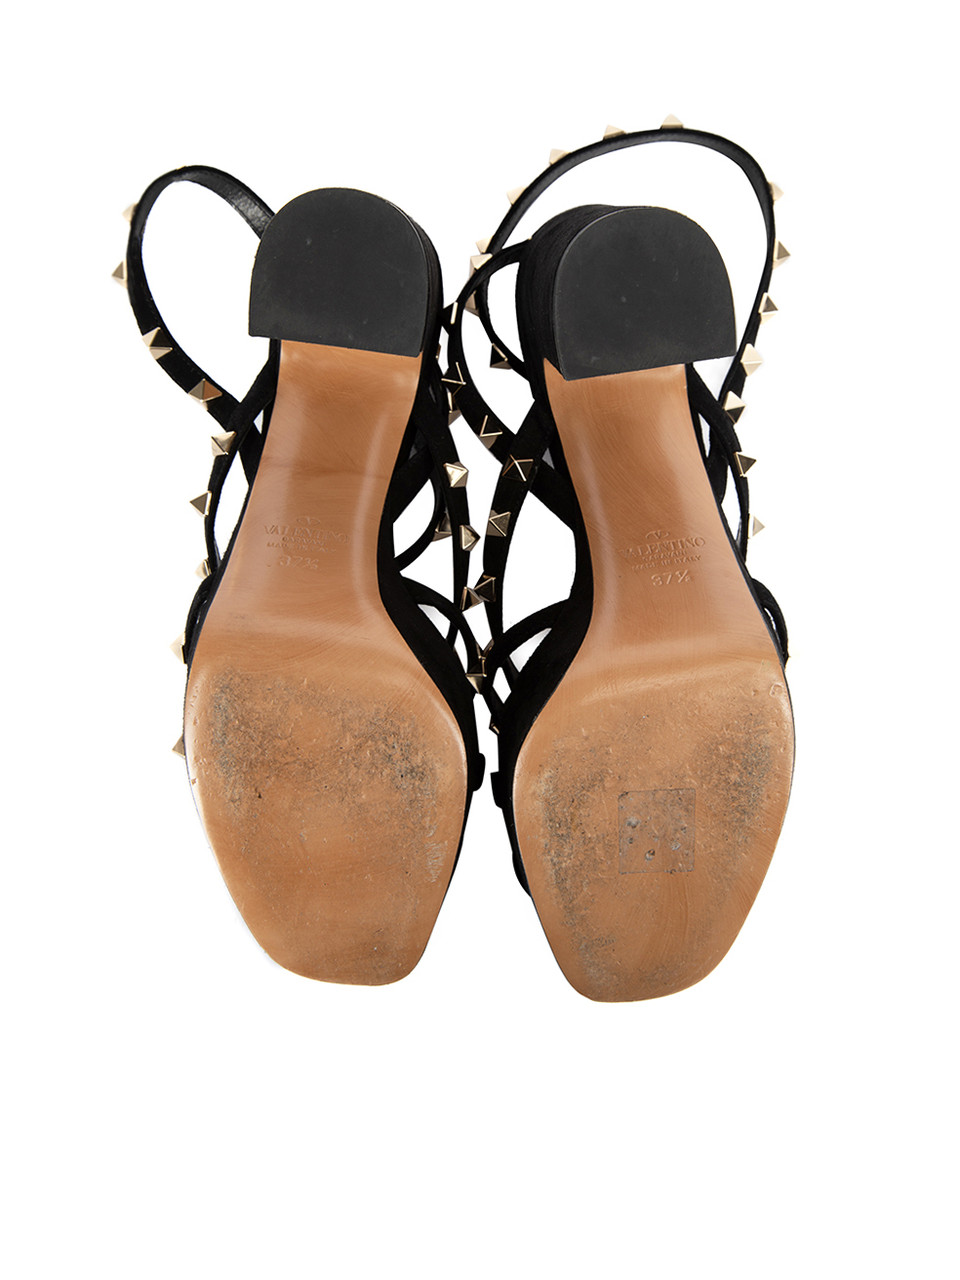 Valentino Garavani Black Suede Rockstud Platform Heel Sandals